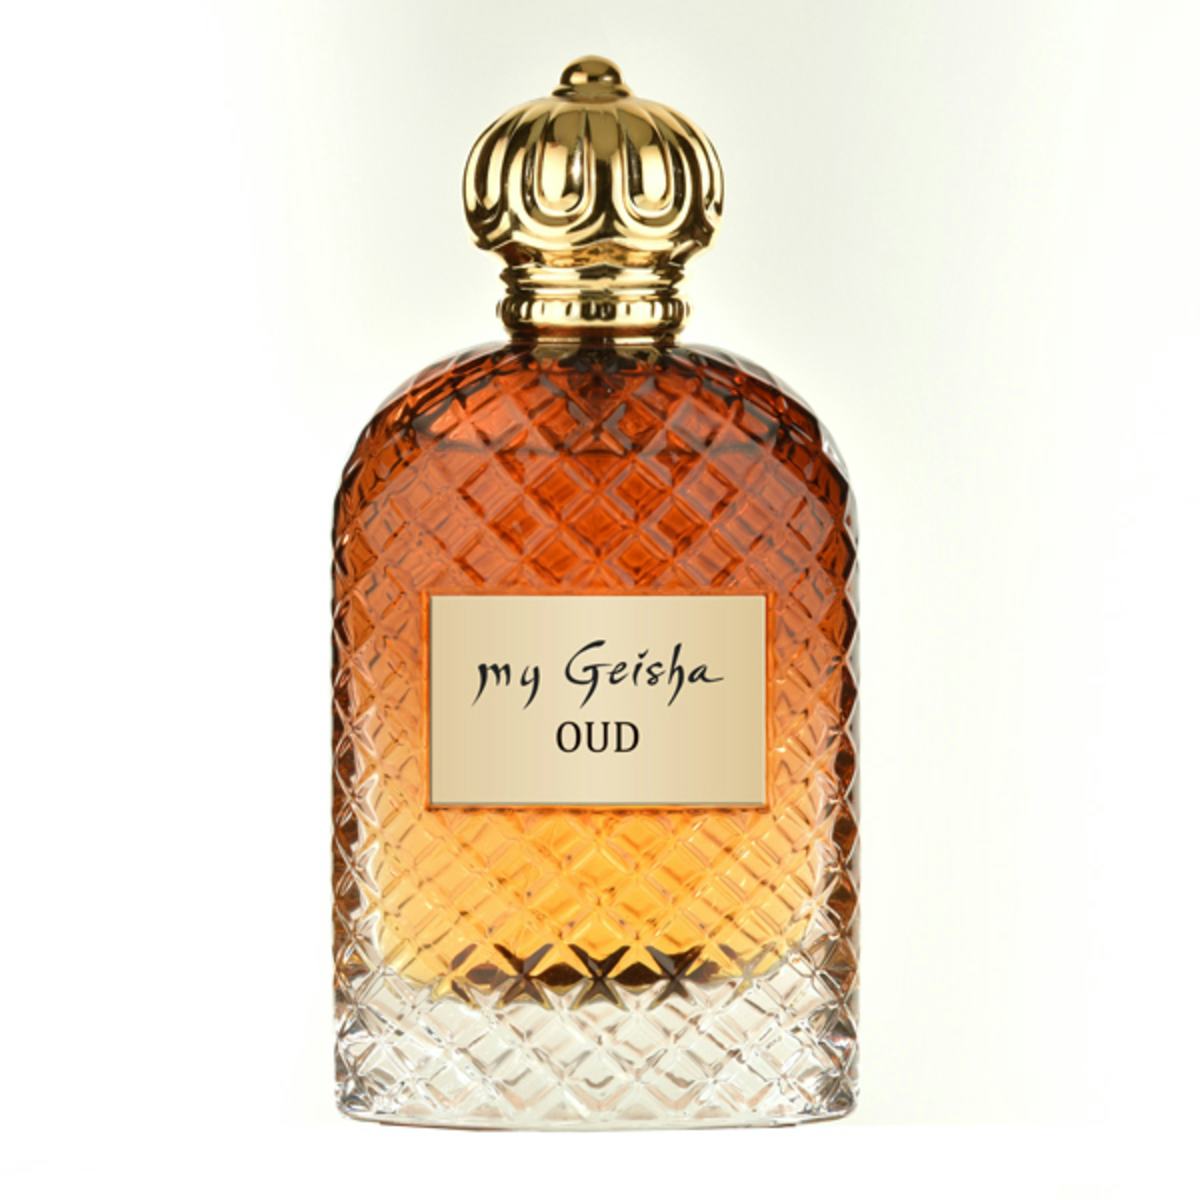 Extrait de parfum OUD 100 ml, artisanal product for direct sale in Switzerland